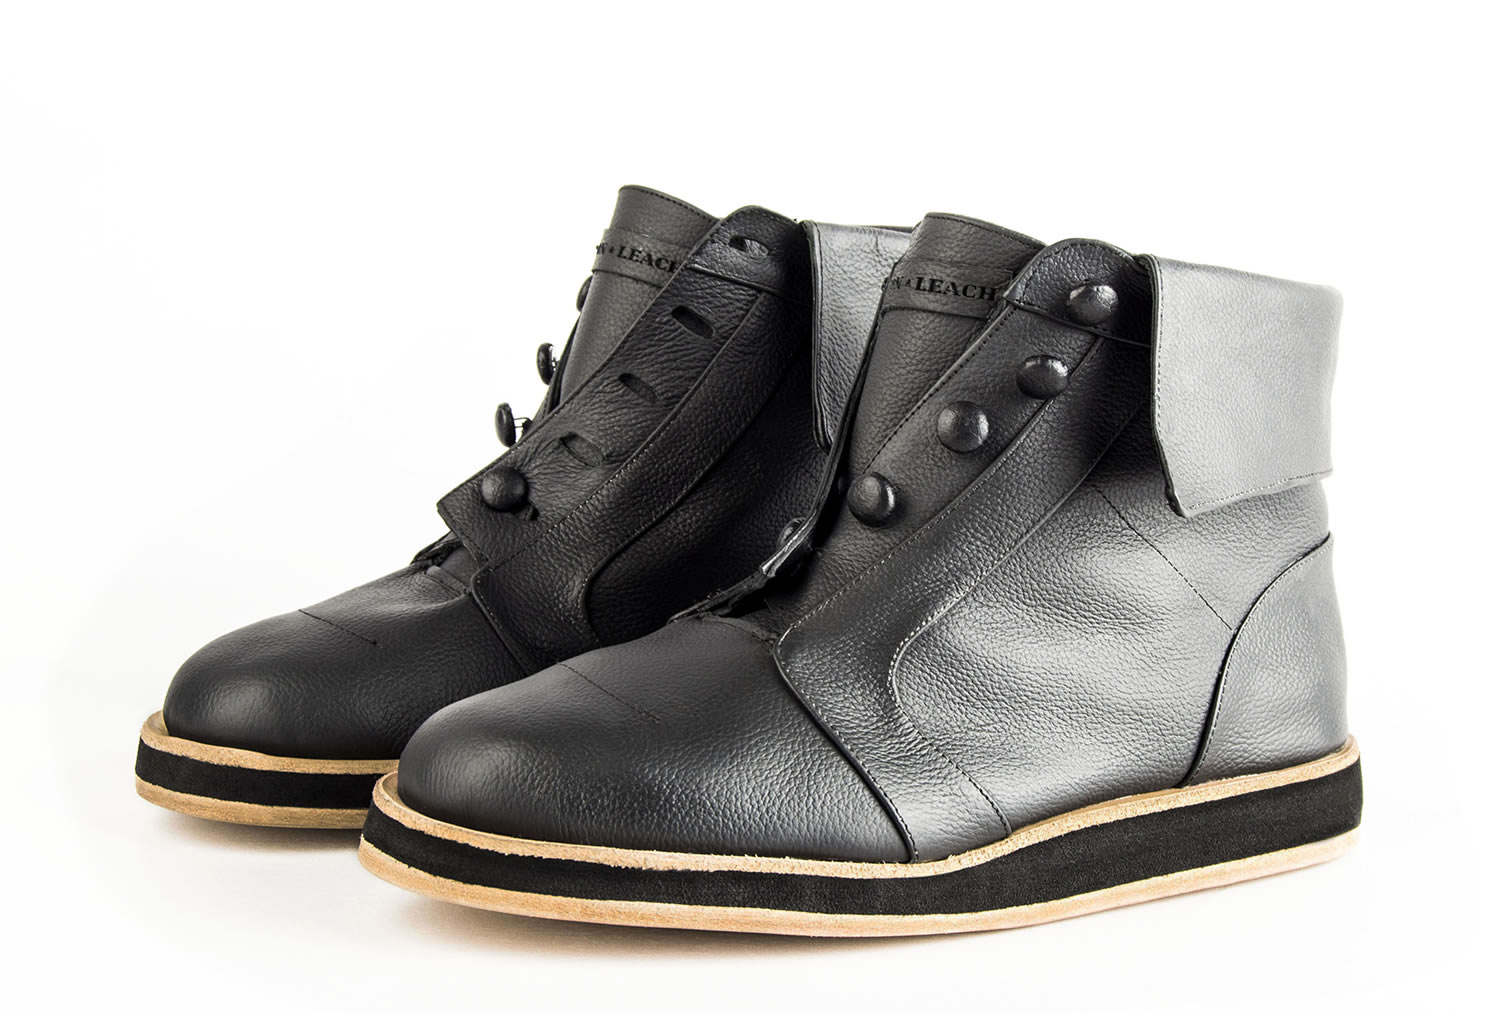 hi-top leather shoes, Byron & Leach by Marco Vinicio Garrido Felix